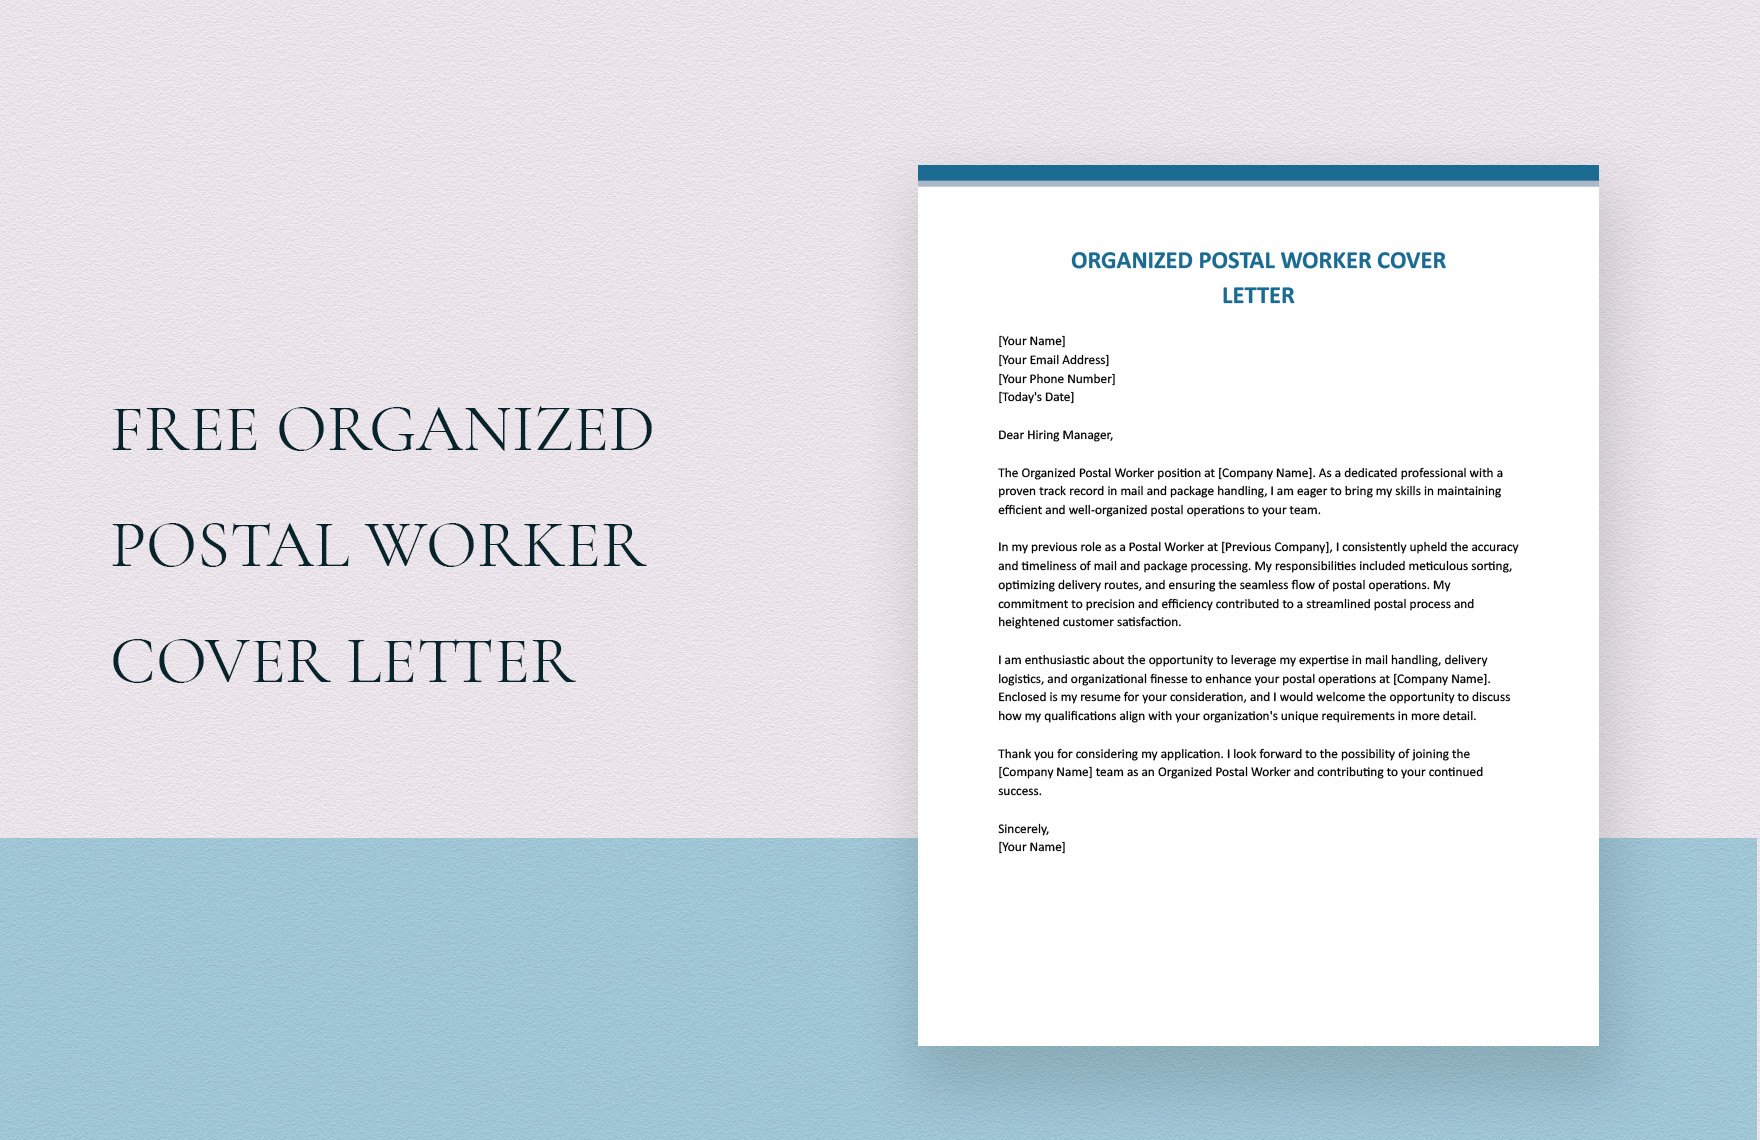 Organized Postal Worker Cover Letter